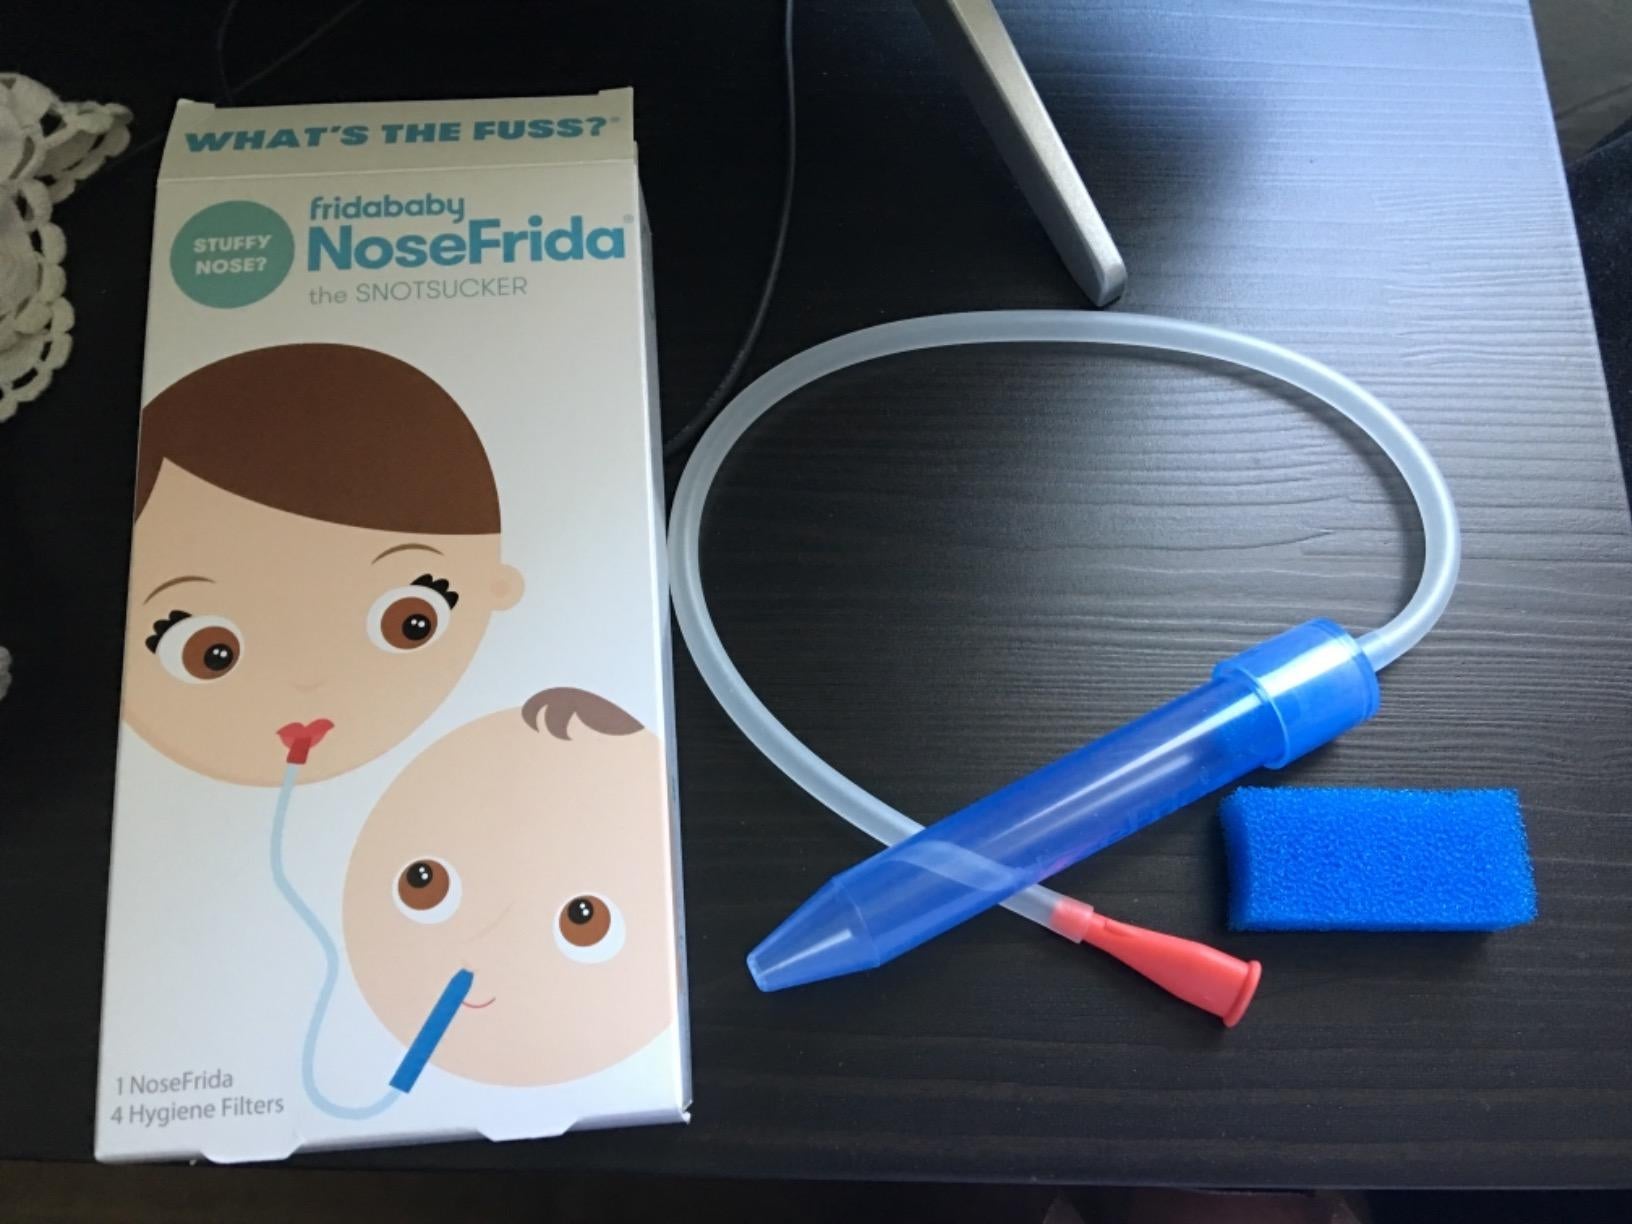 FridaBaby NoseFrida Aspirator - The Breastfeeding Center, LLC